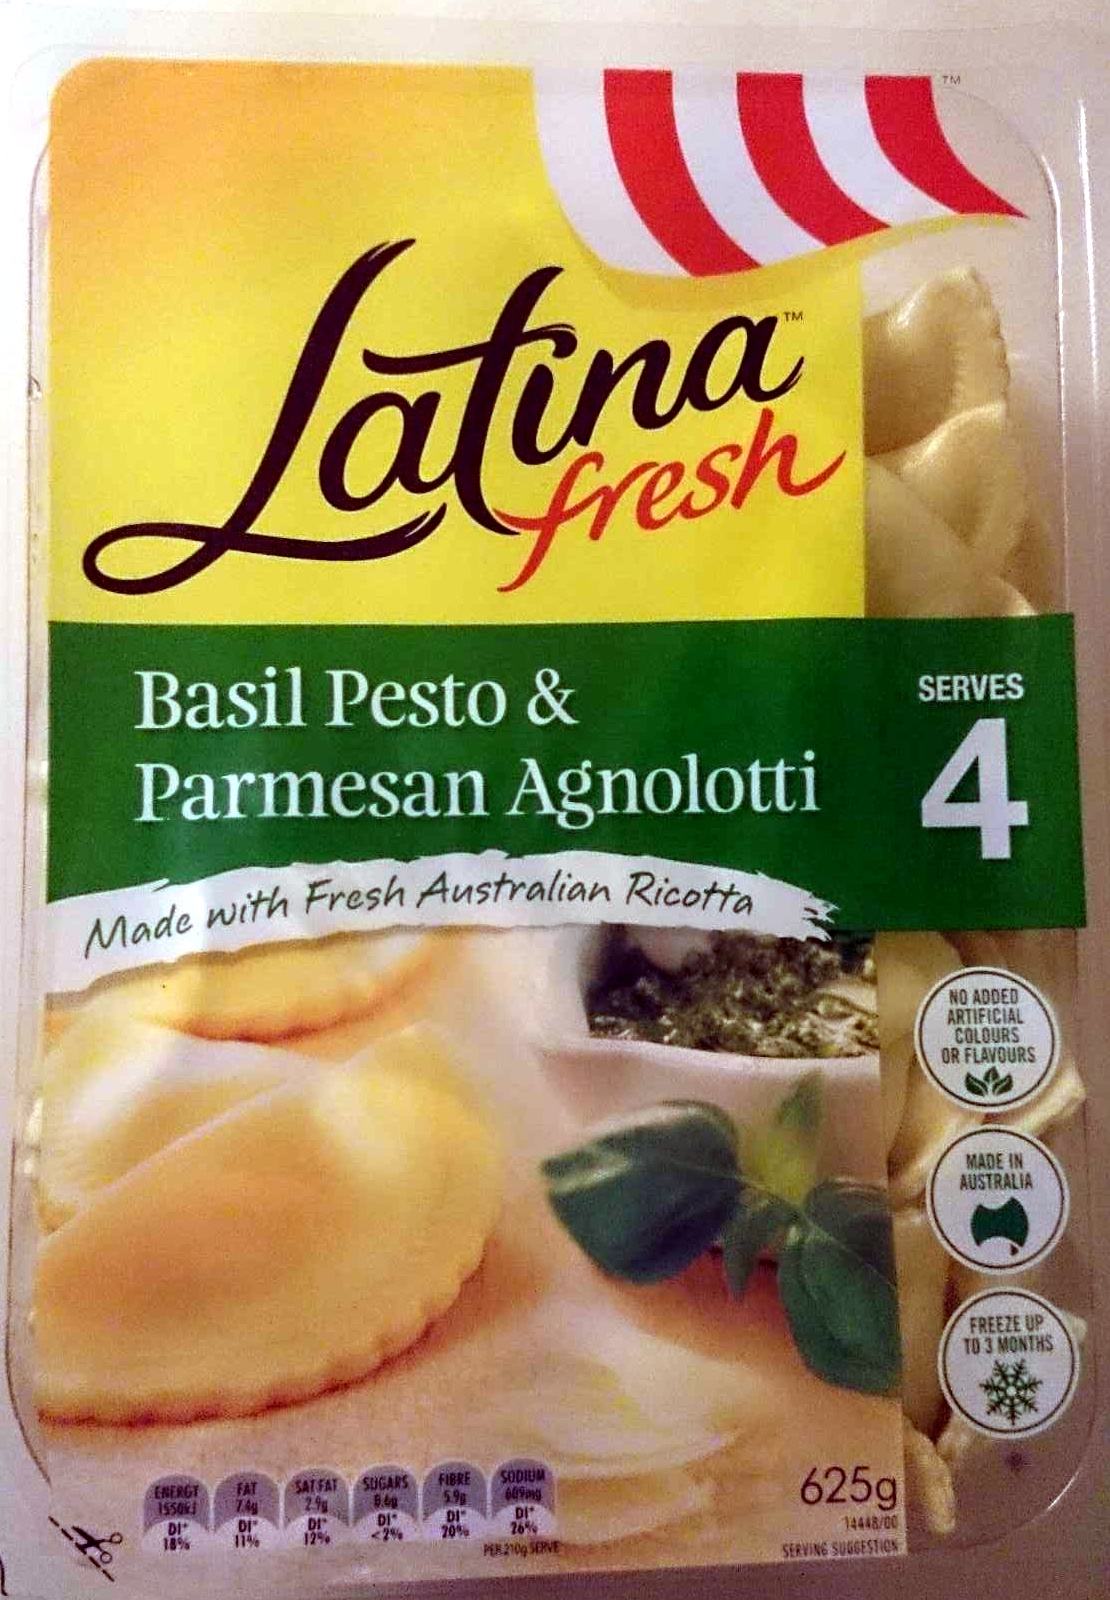 Basil Pesto & Parmesan Agnolotti - Producto - en